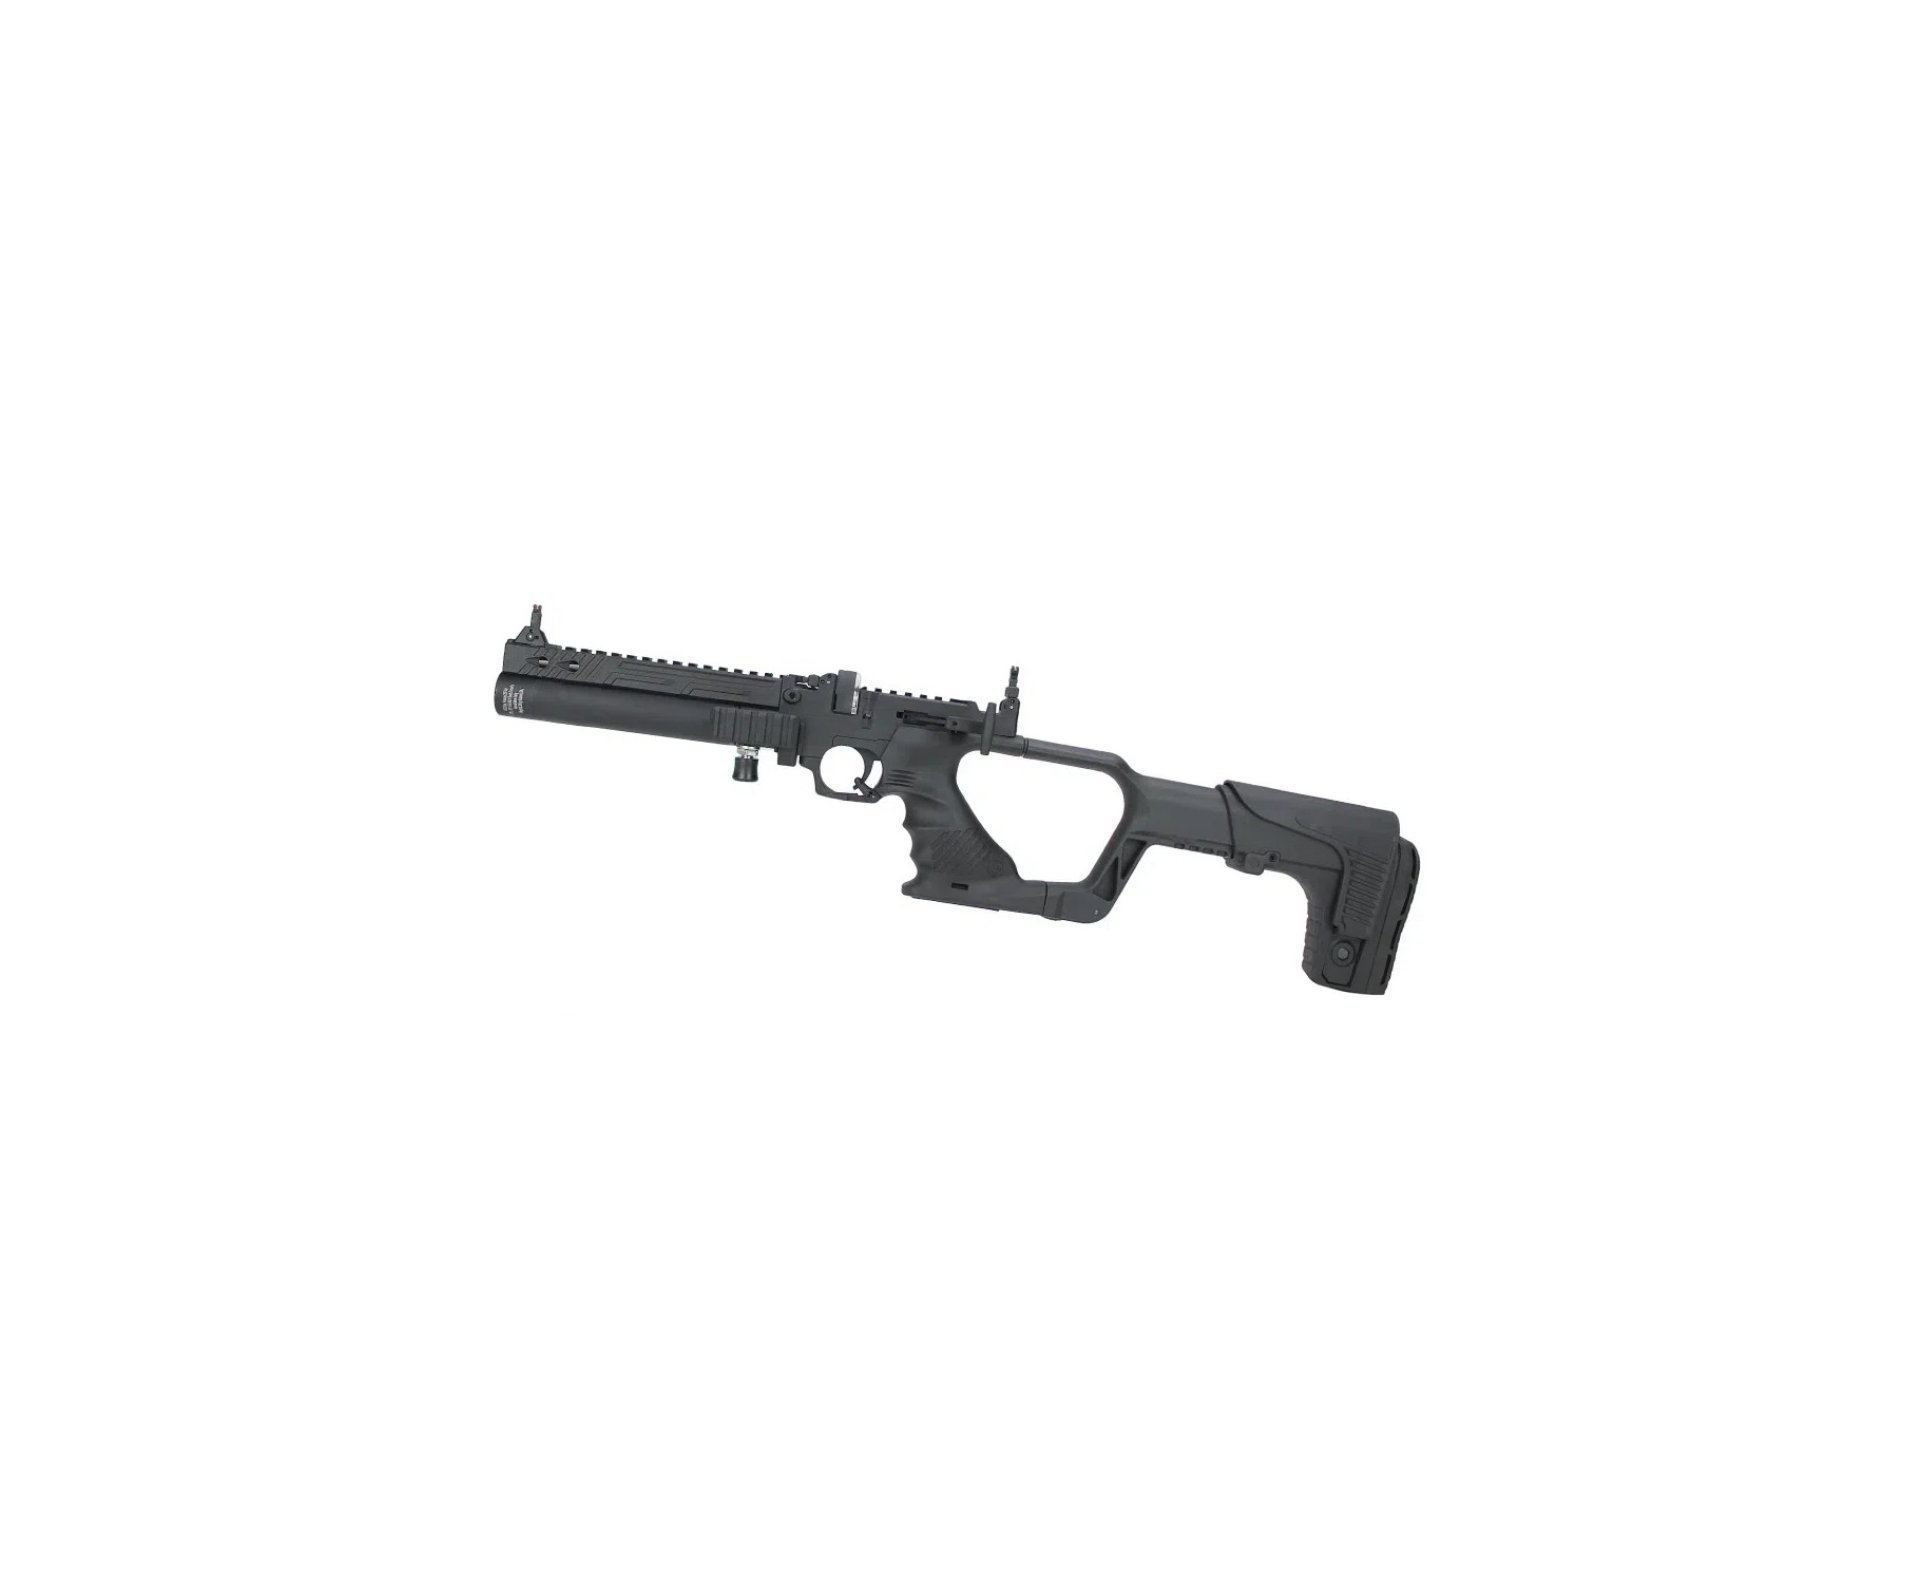 Pistola de Pressão PCP Hatsan AIR JET 1 Cal 5.5mm - Rossi + Bomba + Chumbinho + Red Dot 1x30